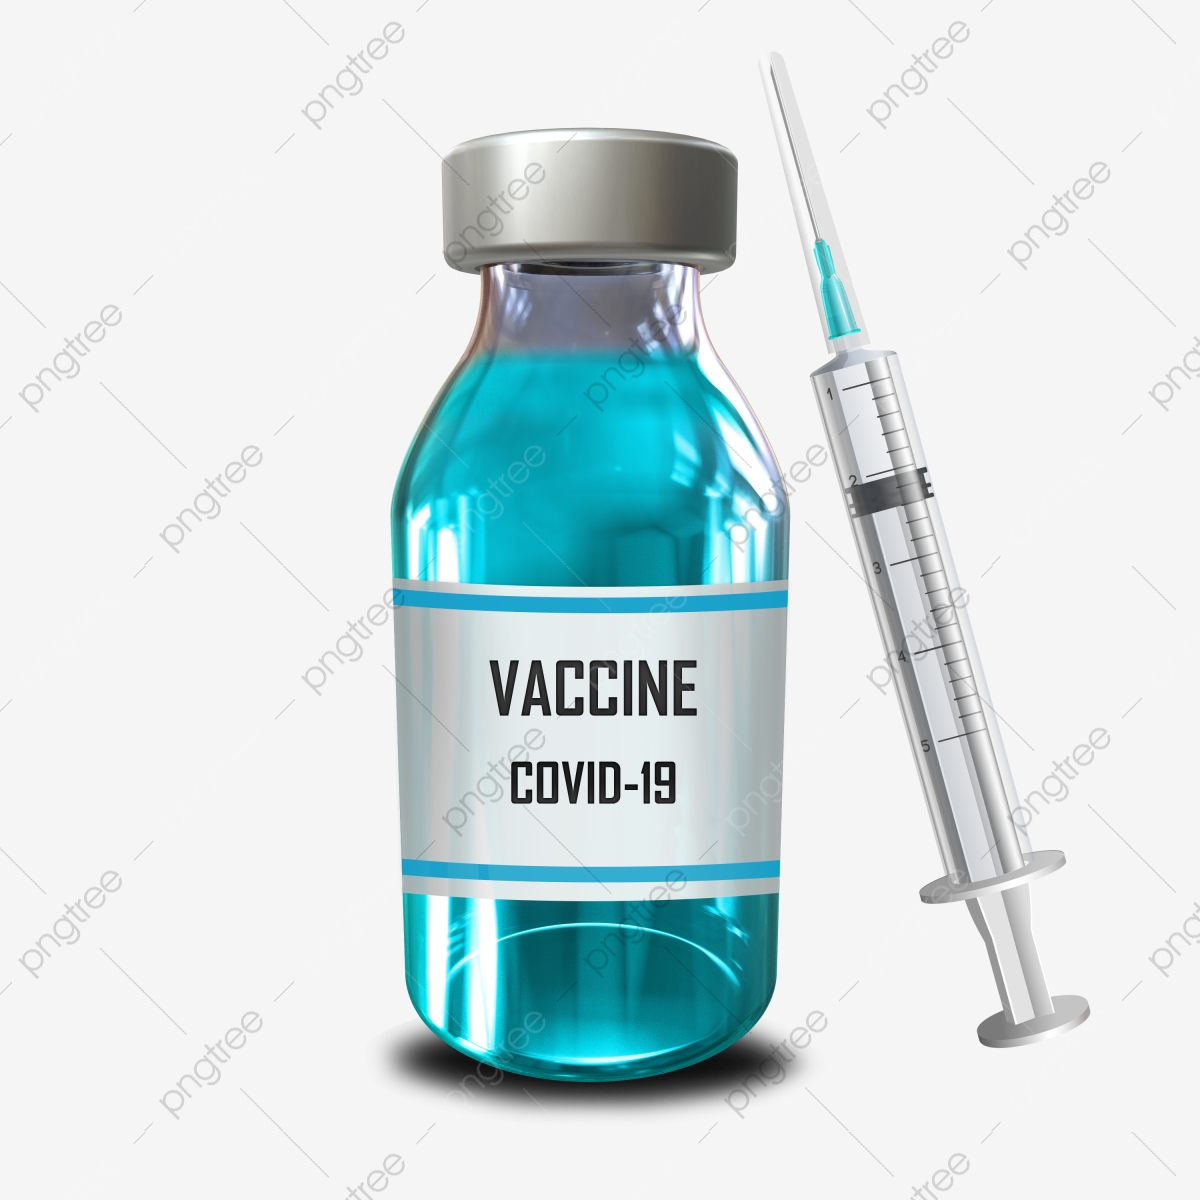 Concept Coronavirus Vaccine Covid 19 Bottle And Syringe 3d Illustration